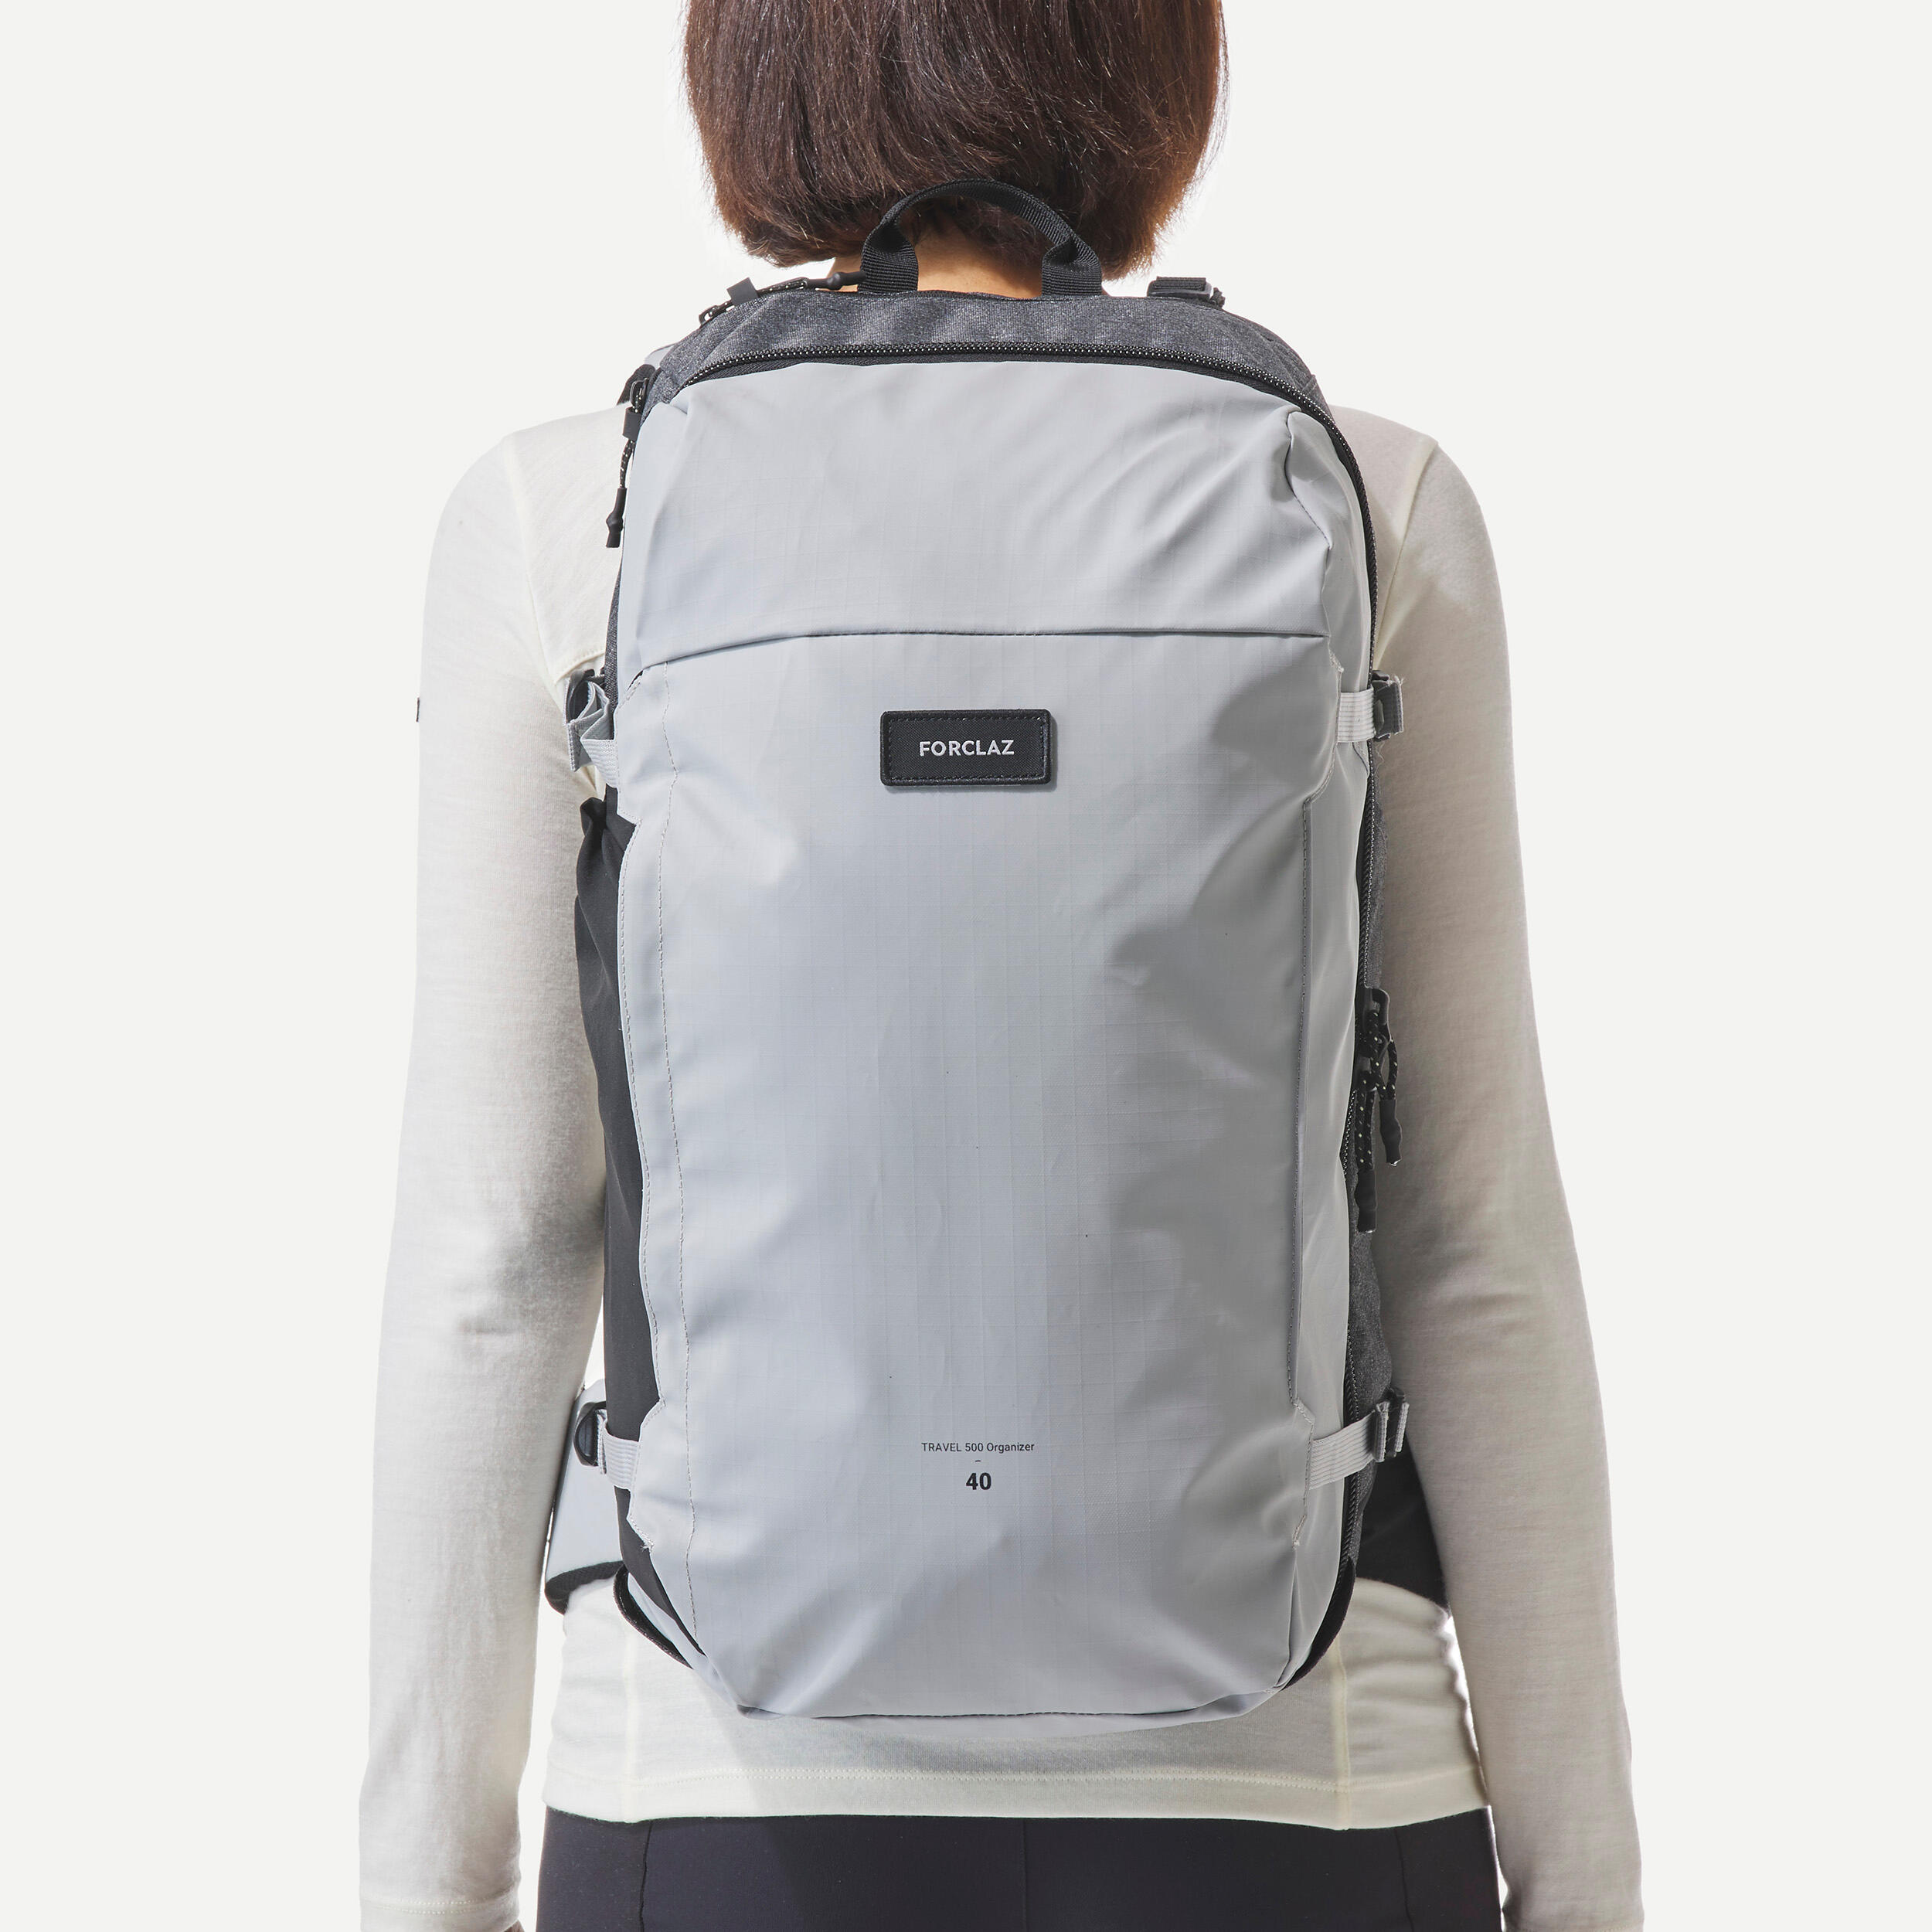 FORCLAZ Travel Backpack 40 L - Travel 500 ORGANIZER Grey